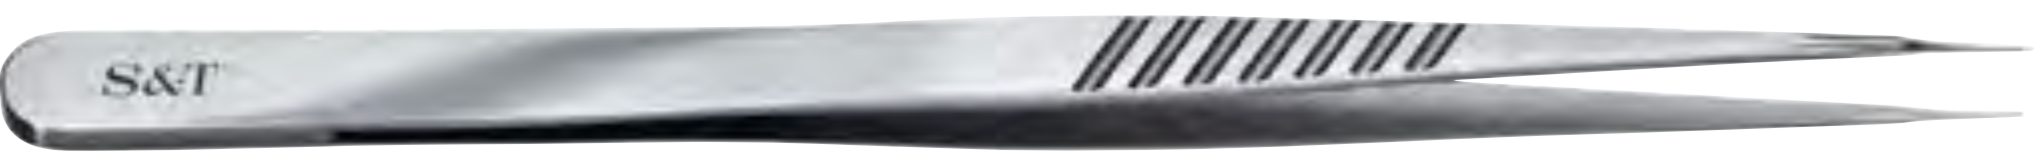 S&T Vessel Dilator 13.5cm JFS-3d.2 Flat Handle 0.2mm Straight Tips image 0